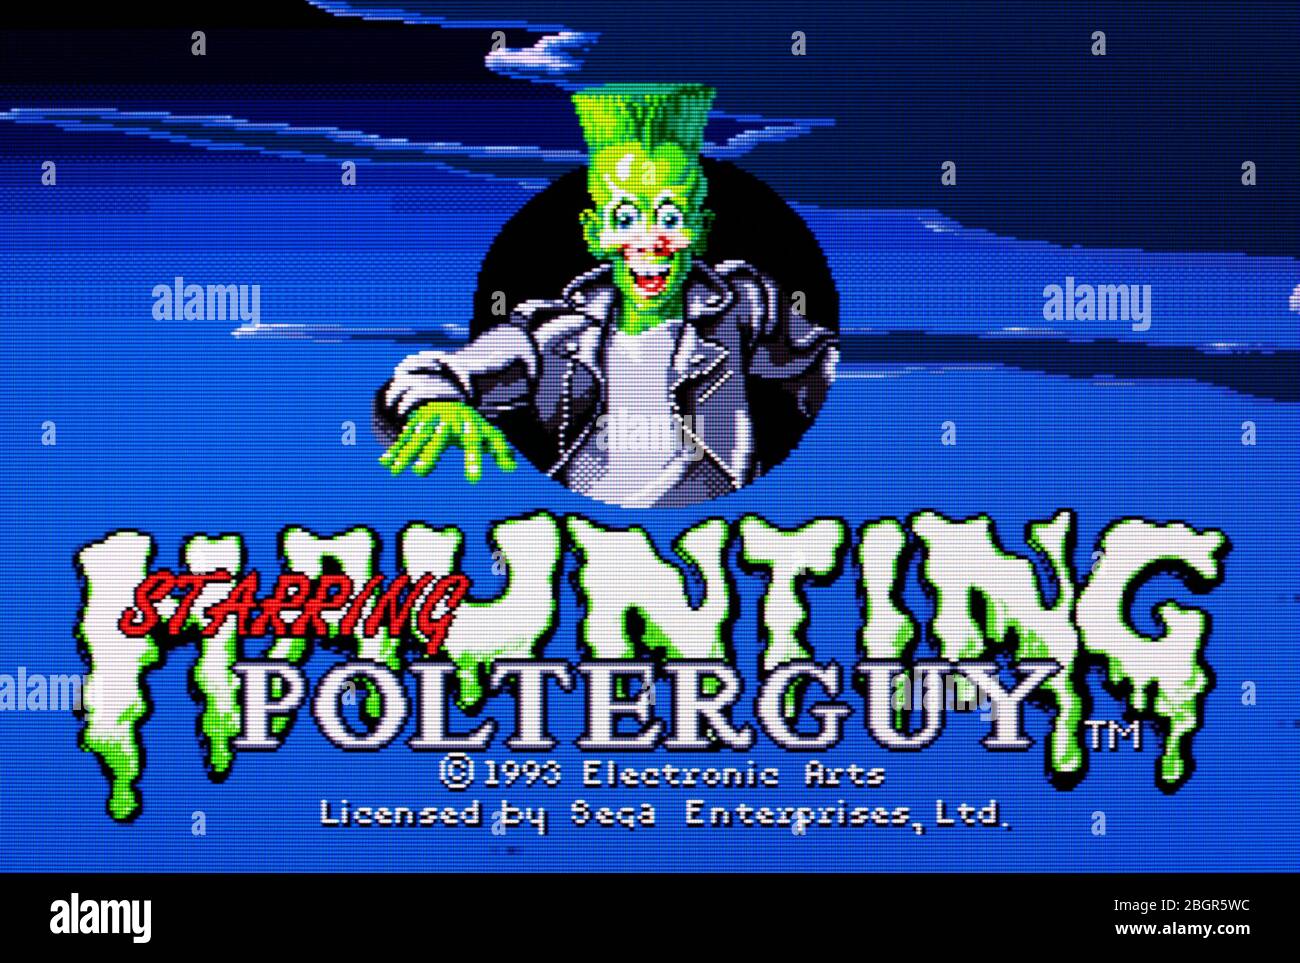 Harunting starring Polterguy - sega Genesis Mega Drive - solo per uso editoriale Foto Stock